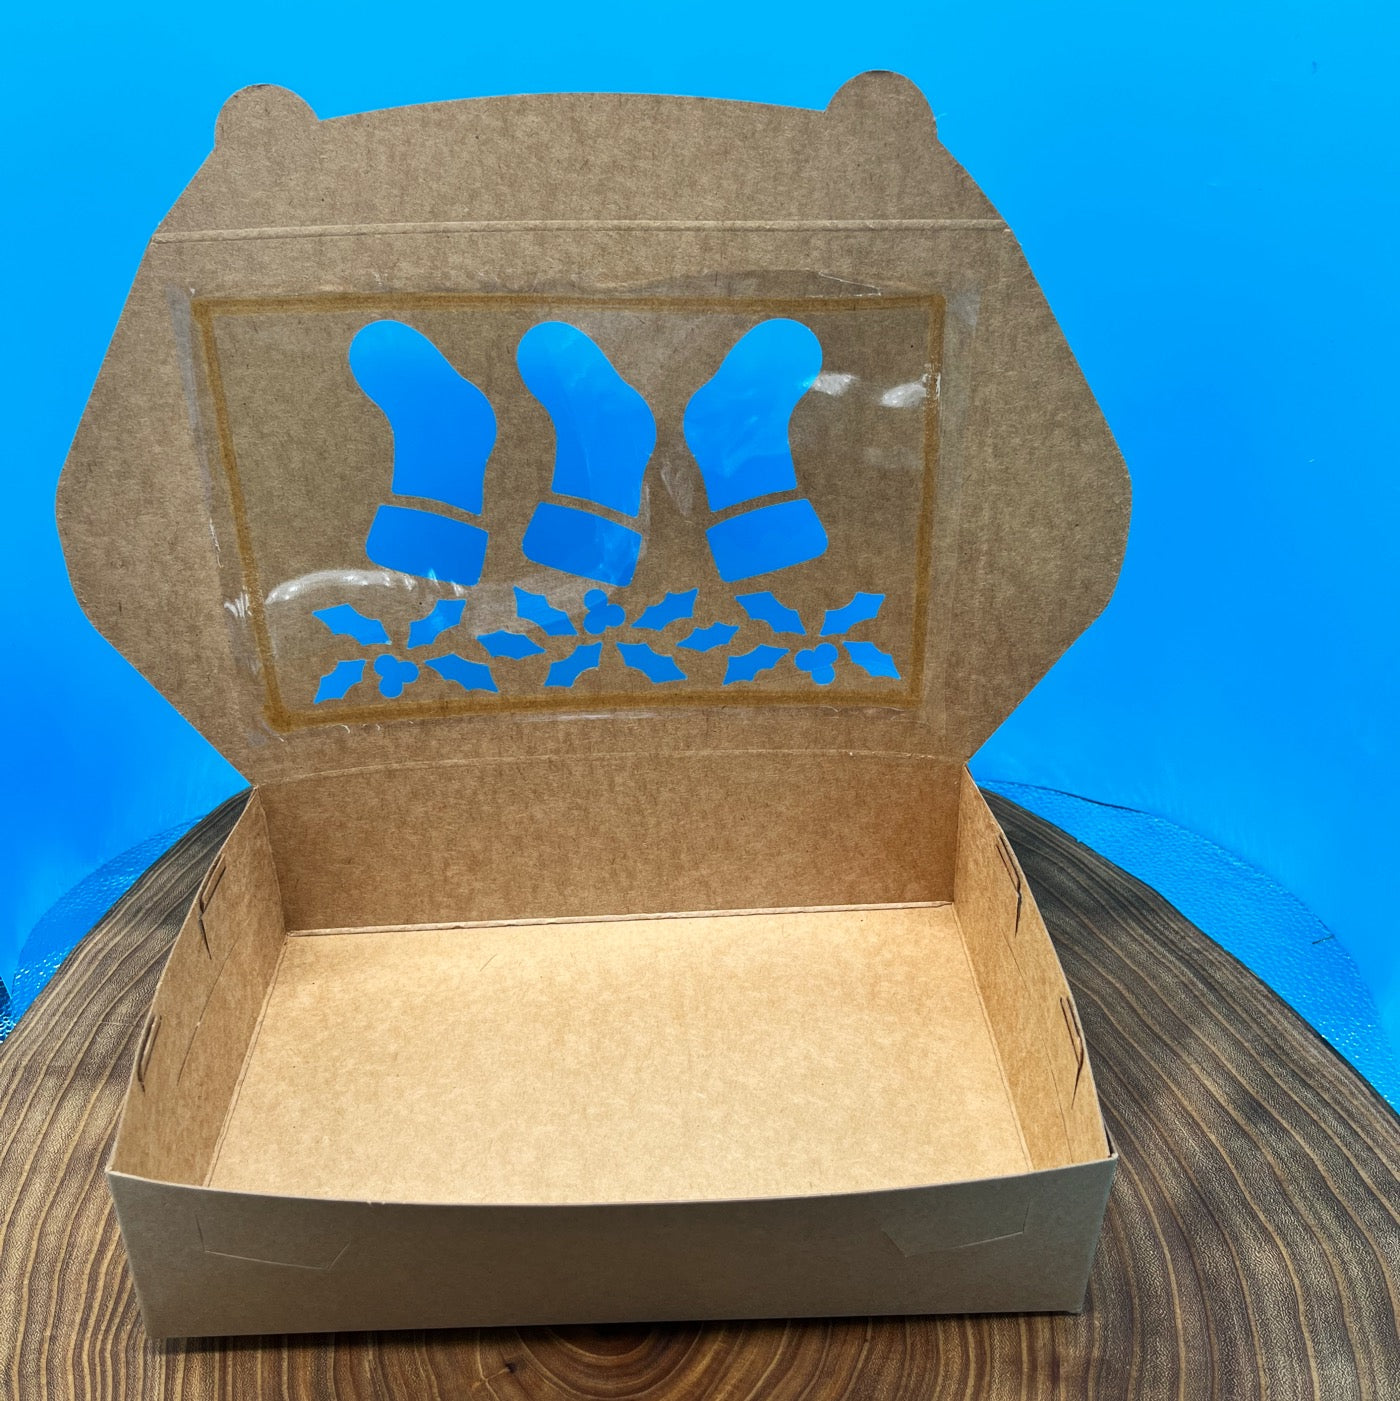 Kraft Pastry Box with Stockings Cutout - 10x7x2.5